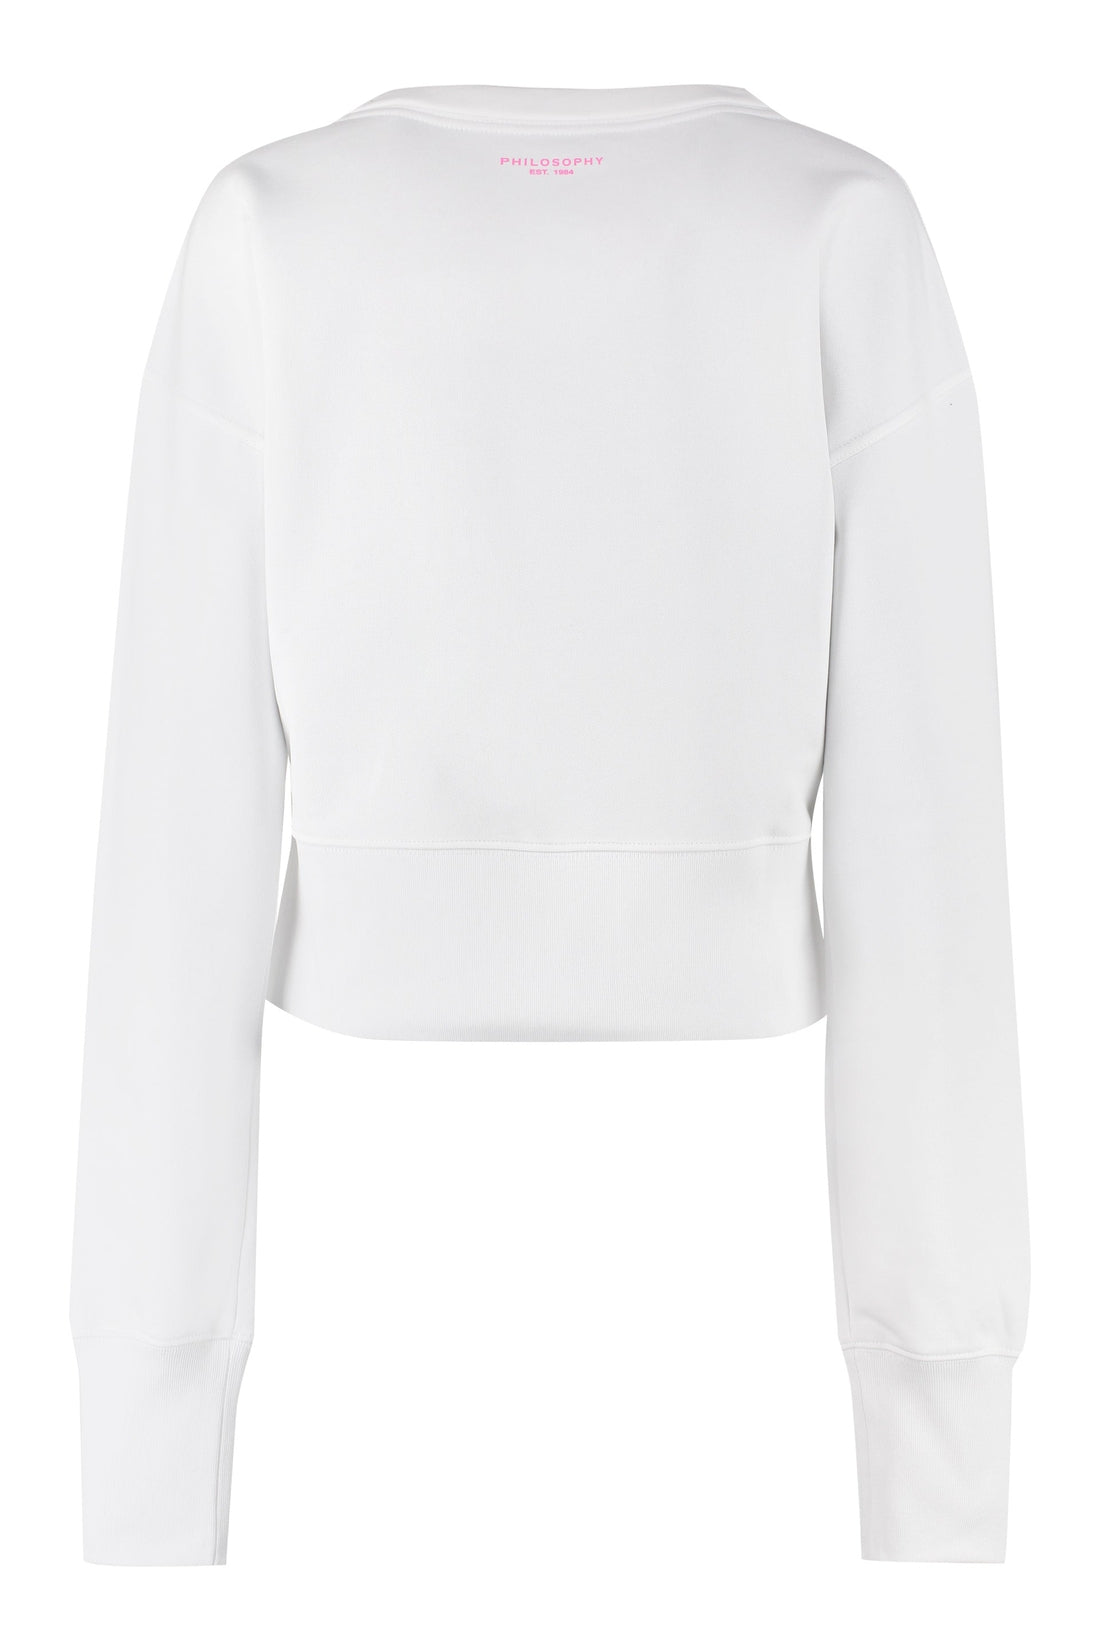 Philosophy di Lorenzo Serafini-OUTLET-SALE-Logo detail cotton sweatshirt-ARCHIVIST